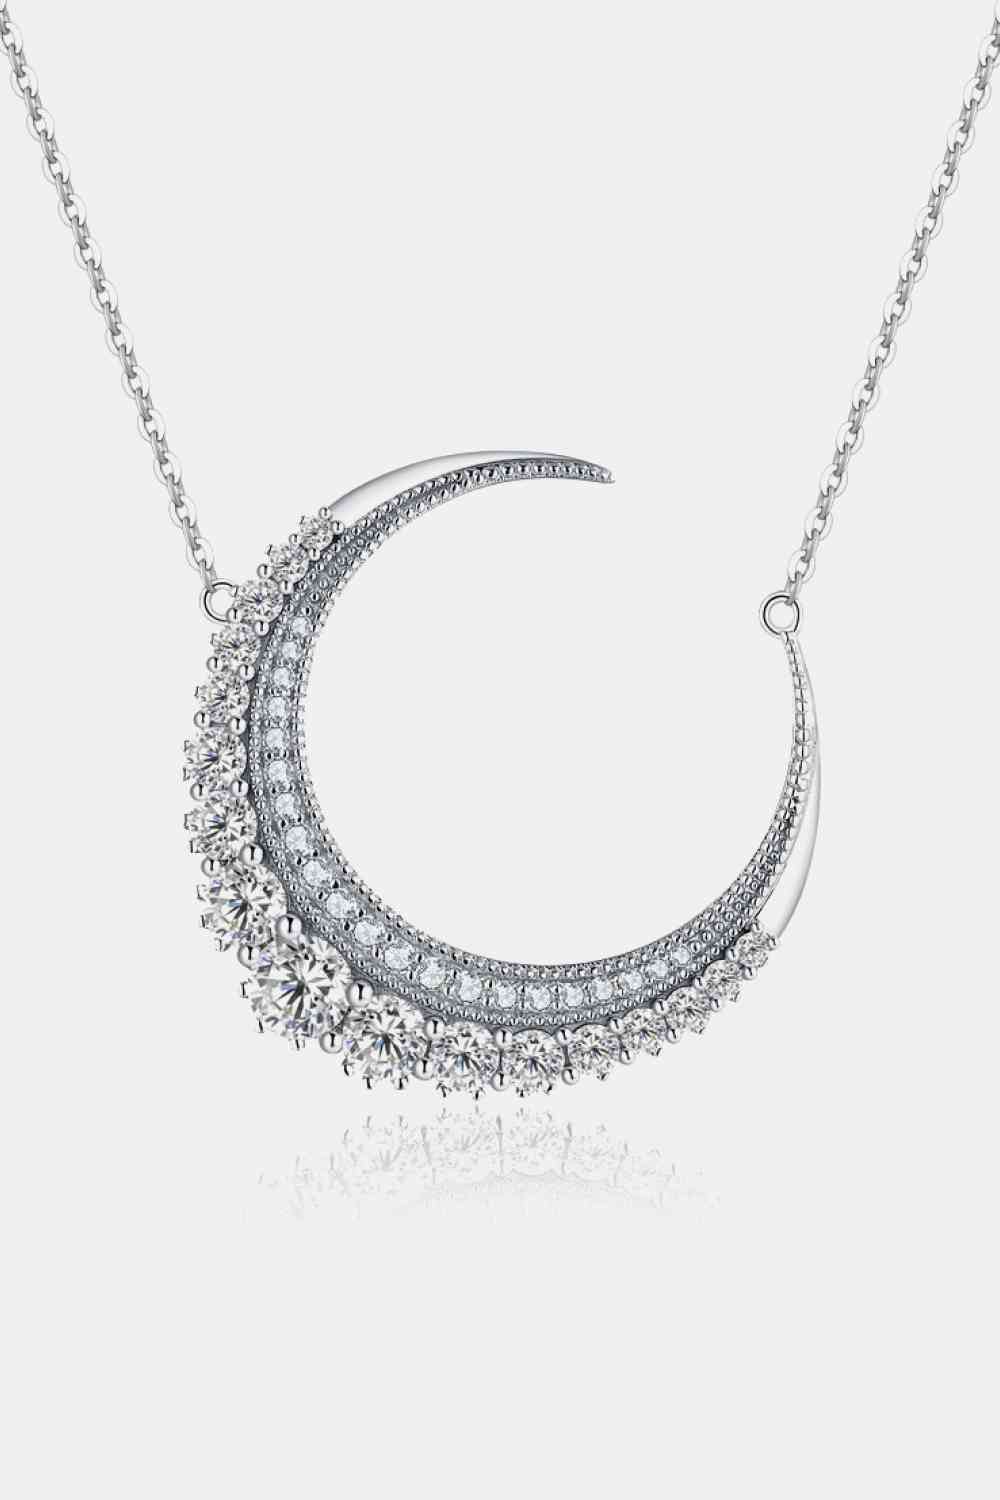 1.8 Carat Moissanite Crescent Moon Shape Pendant Necklace Silver One Size